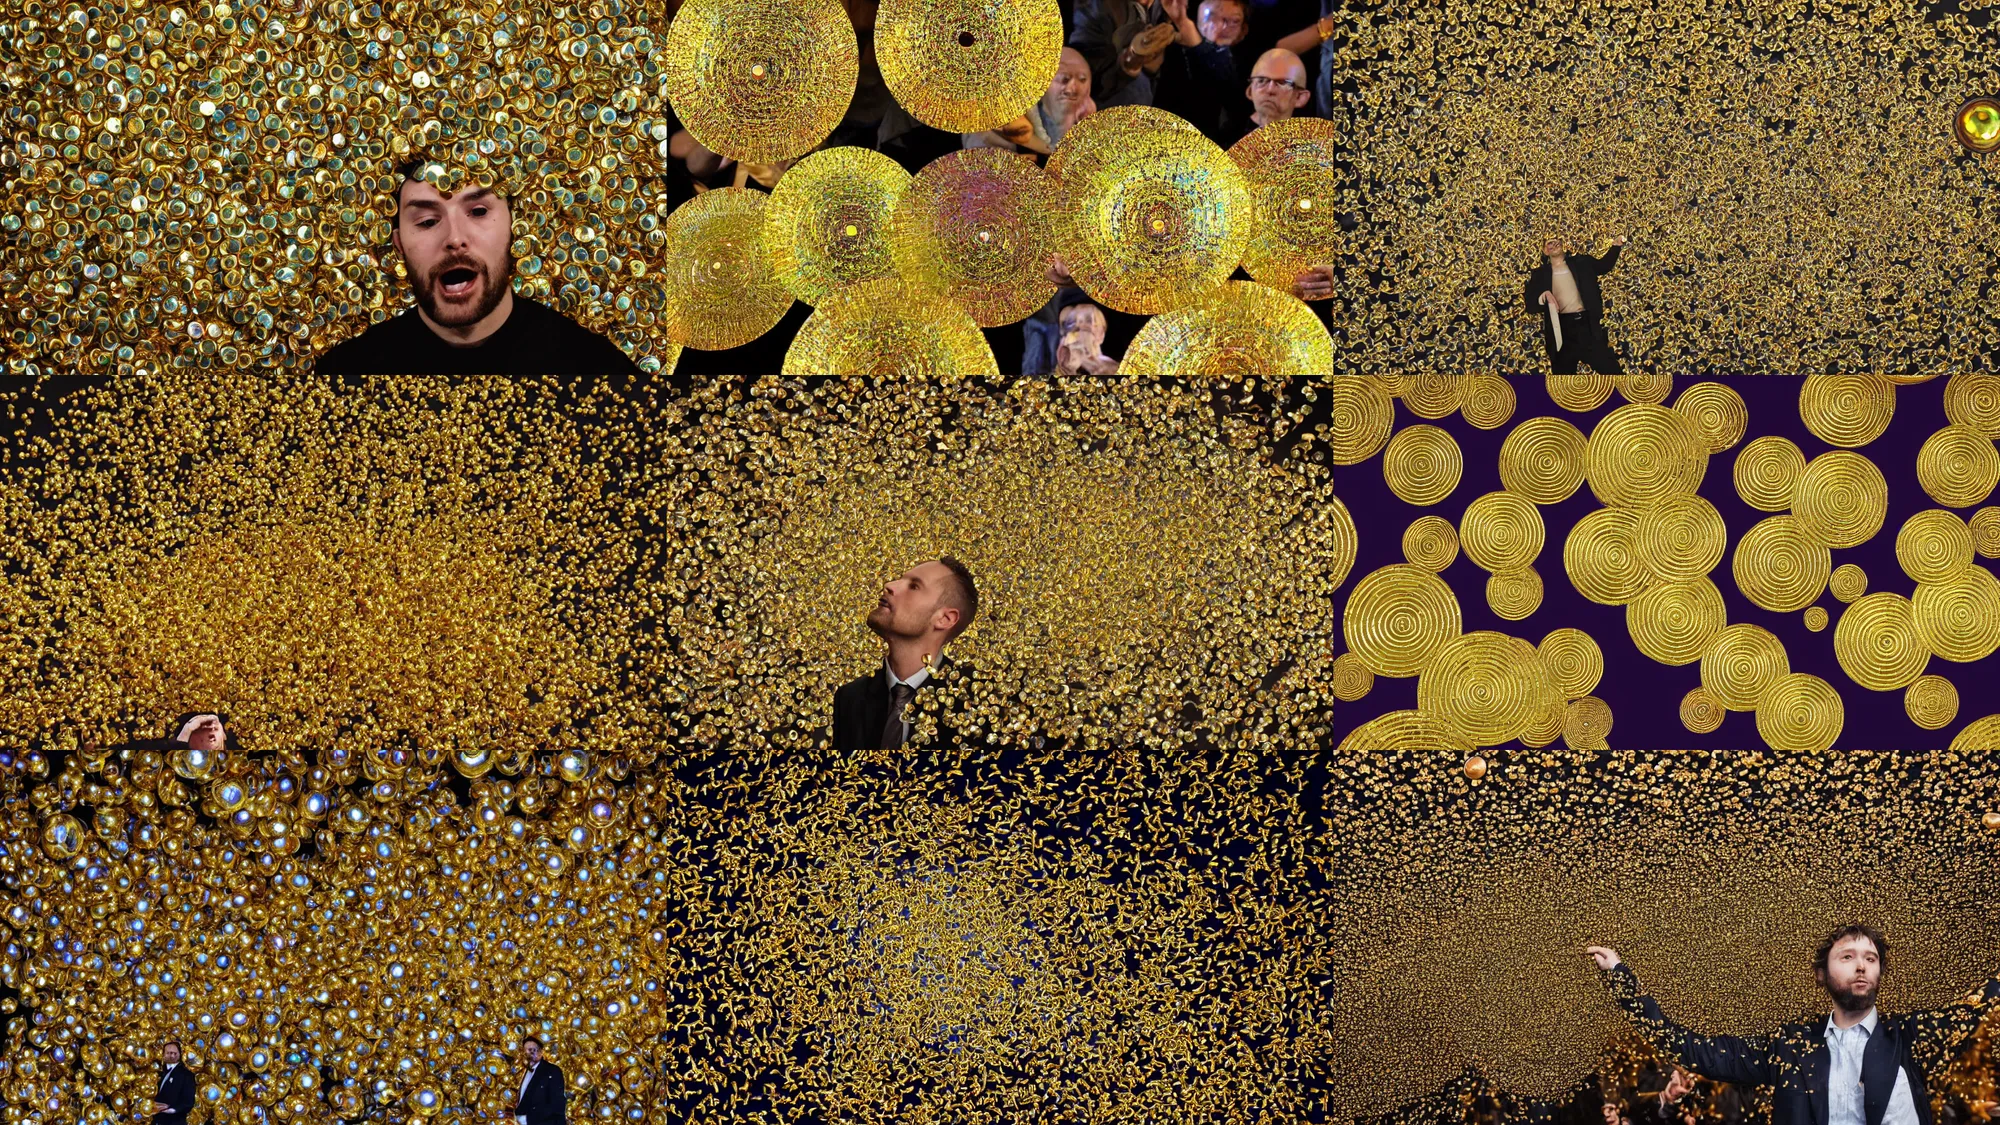 Prompt: swarm of golden iridescent discs surrounding a man